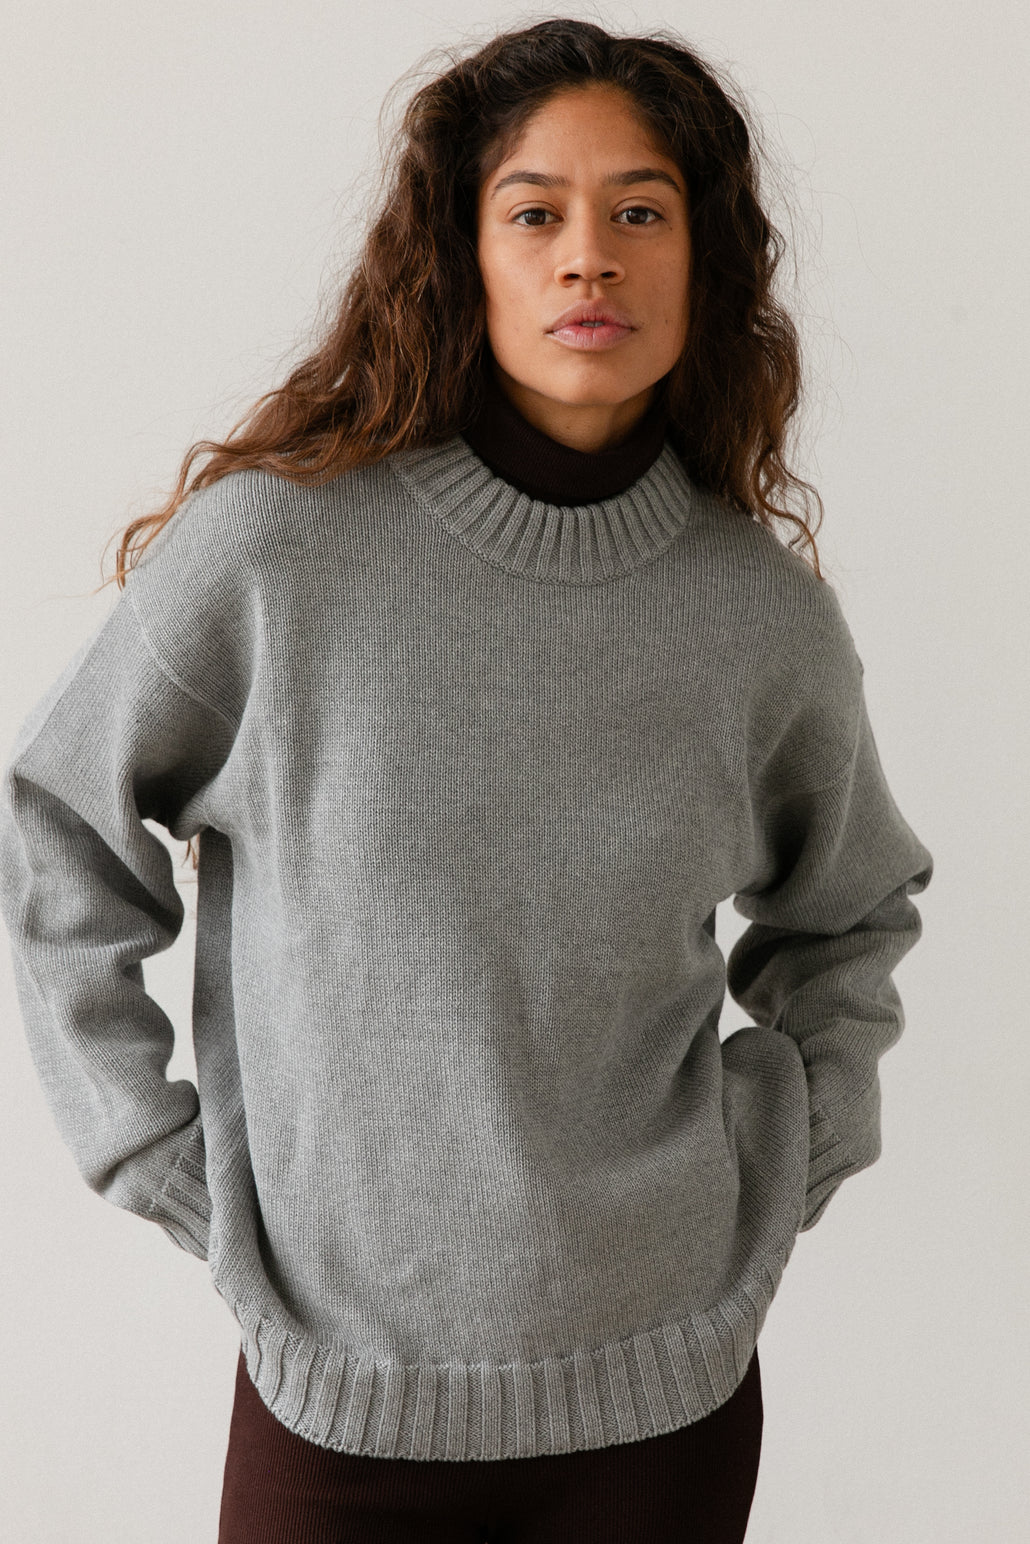 The Cotton Cashmere Crewneck Sweater